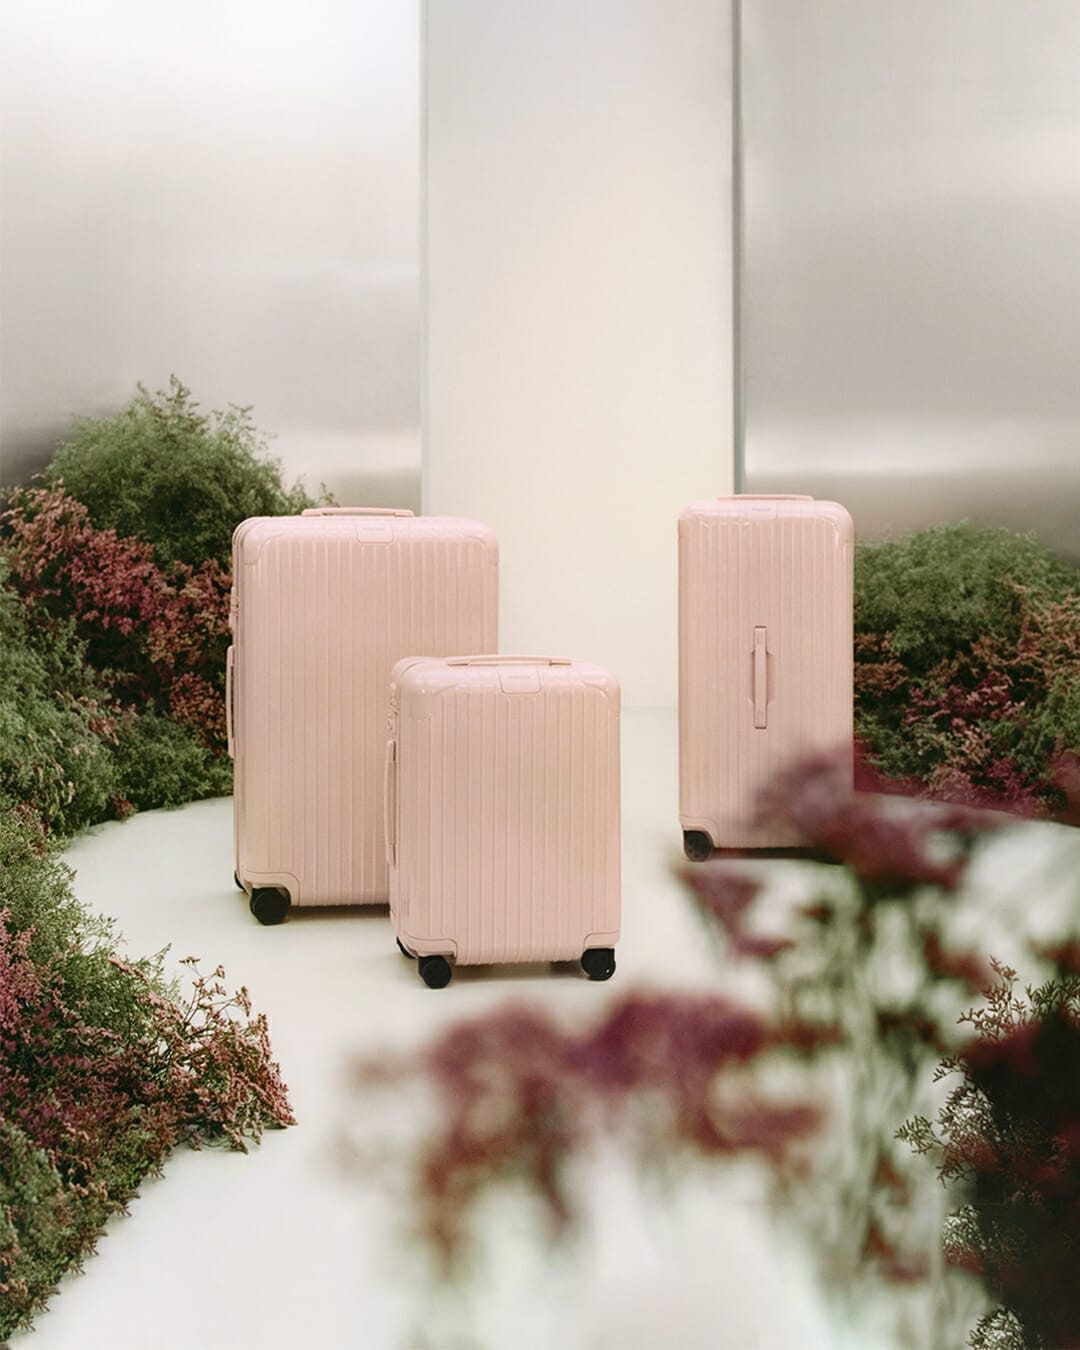 Rimowa luxury luggage pieces